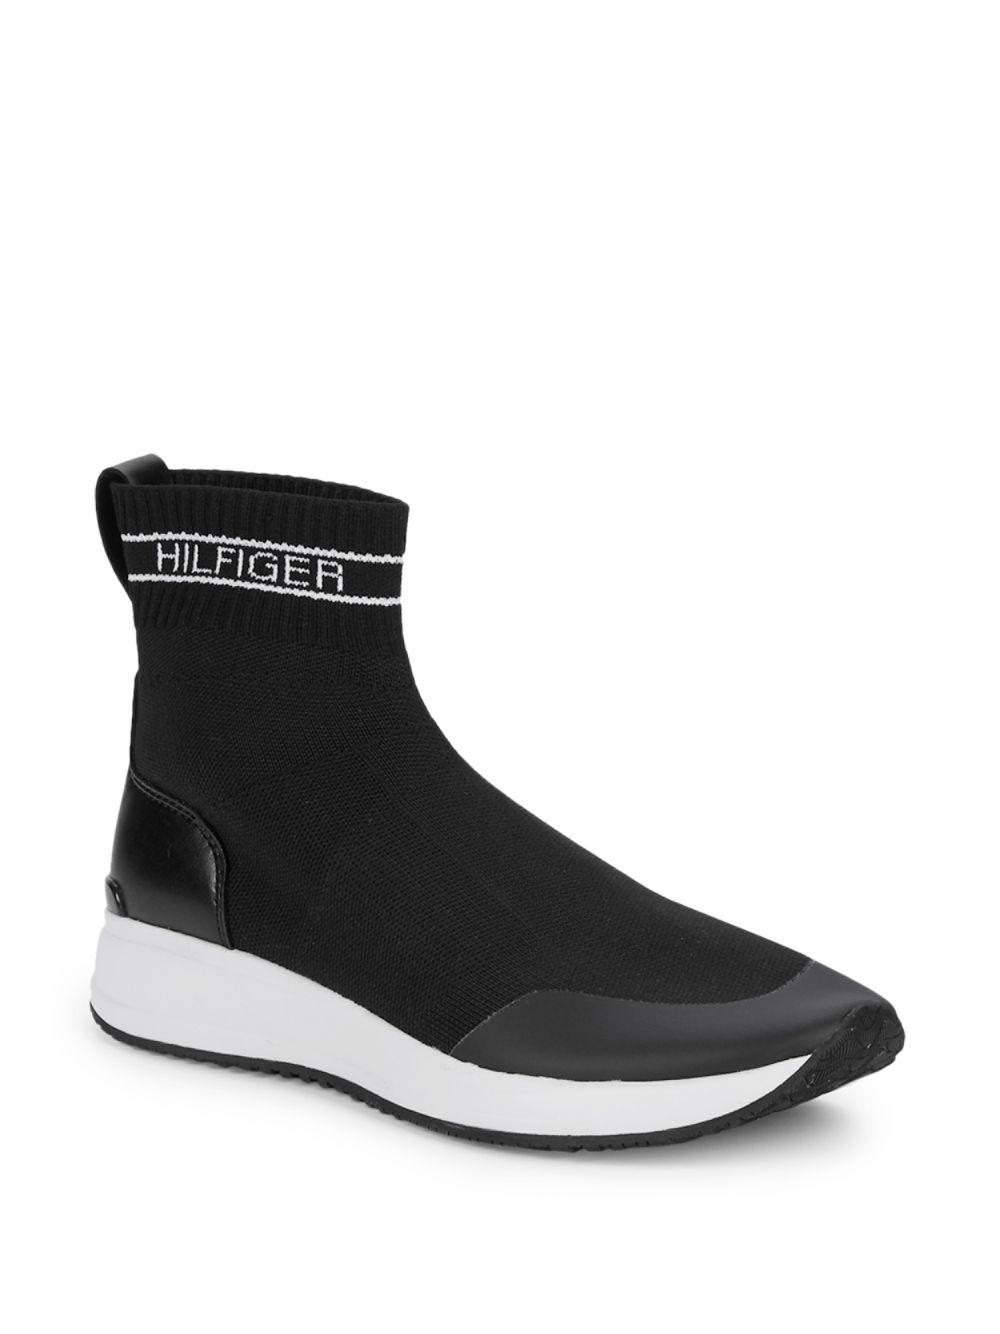 Tommy Hilfiger Reco Sock Sneakers in Black | Lyst